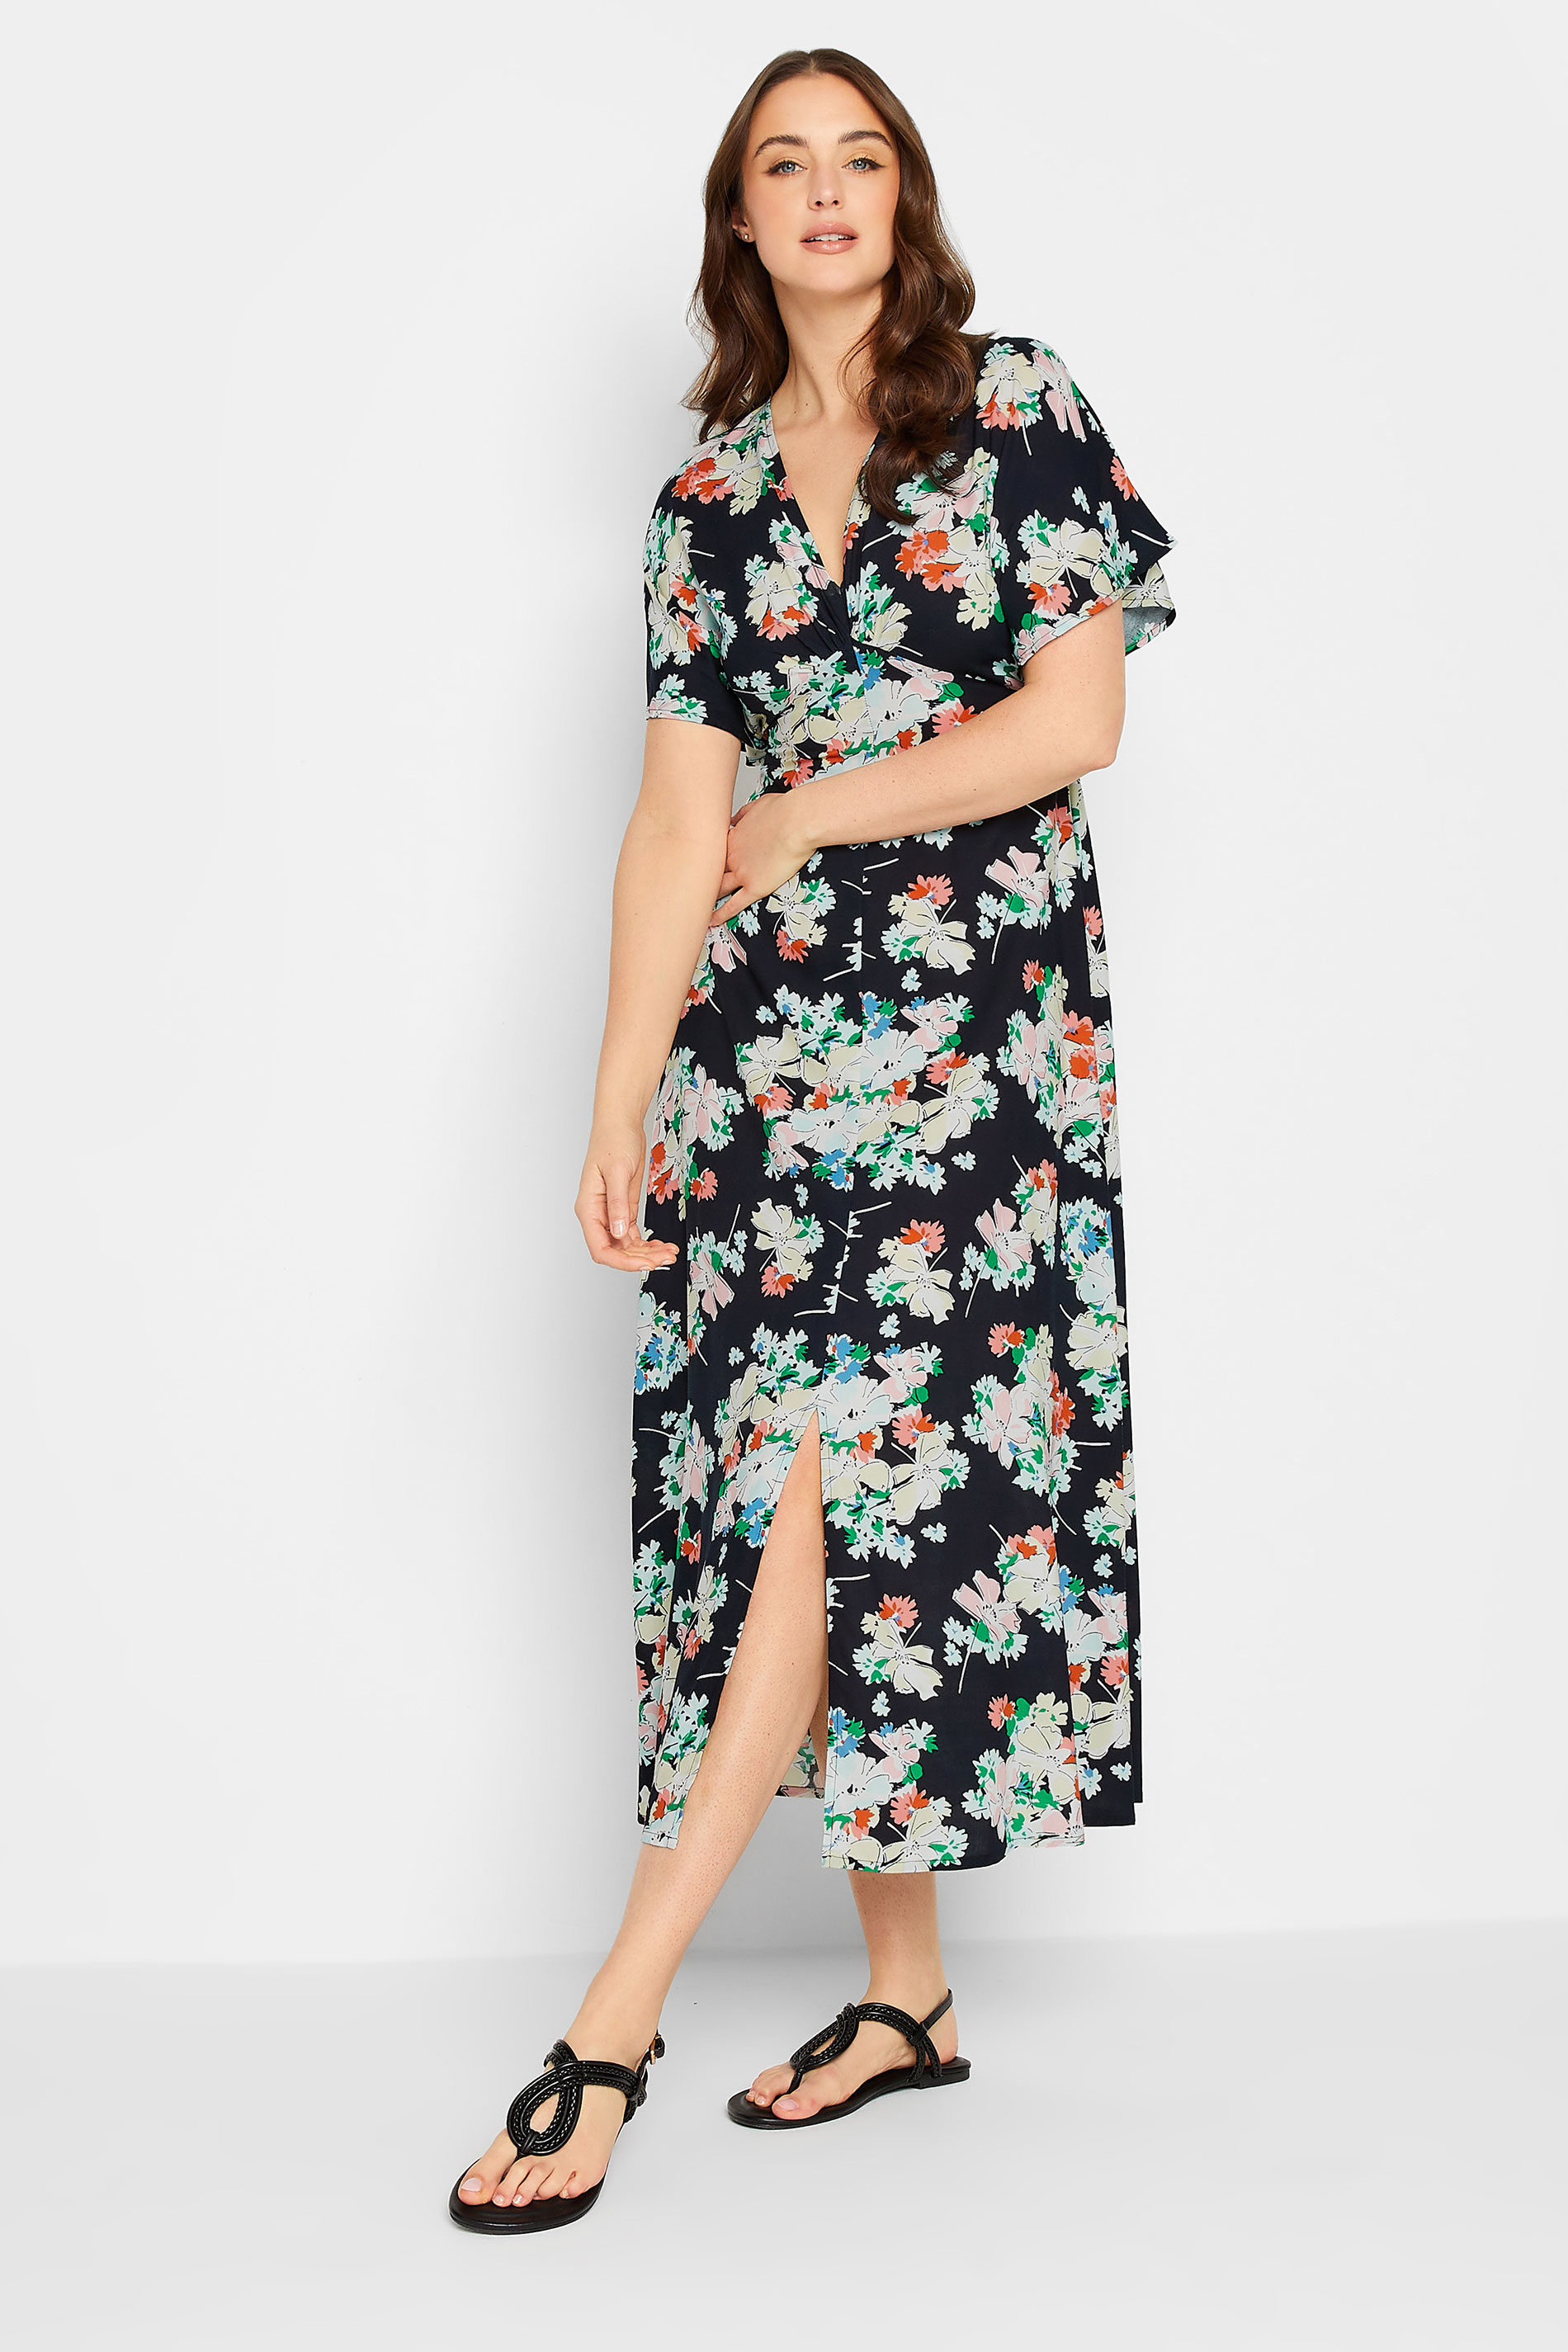 LTS Tall Women's Black Floral Print Split Front Midaxi Dress | Long Tall Sally 2